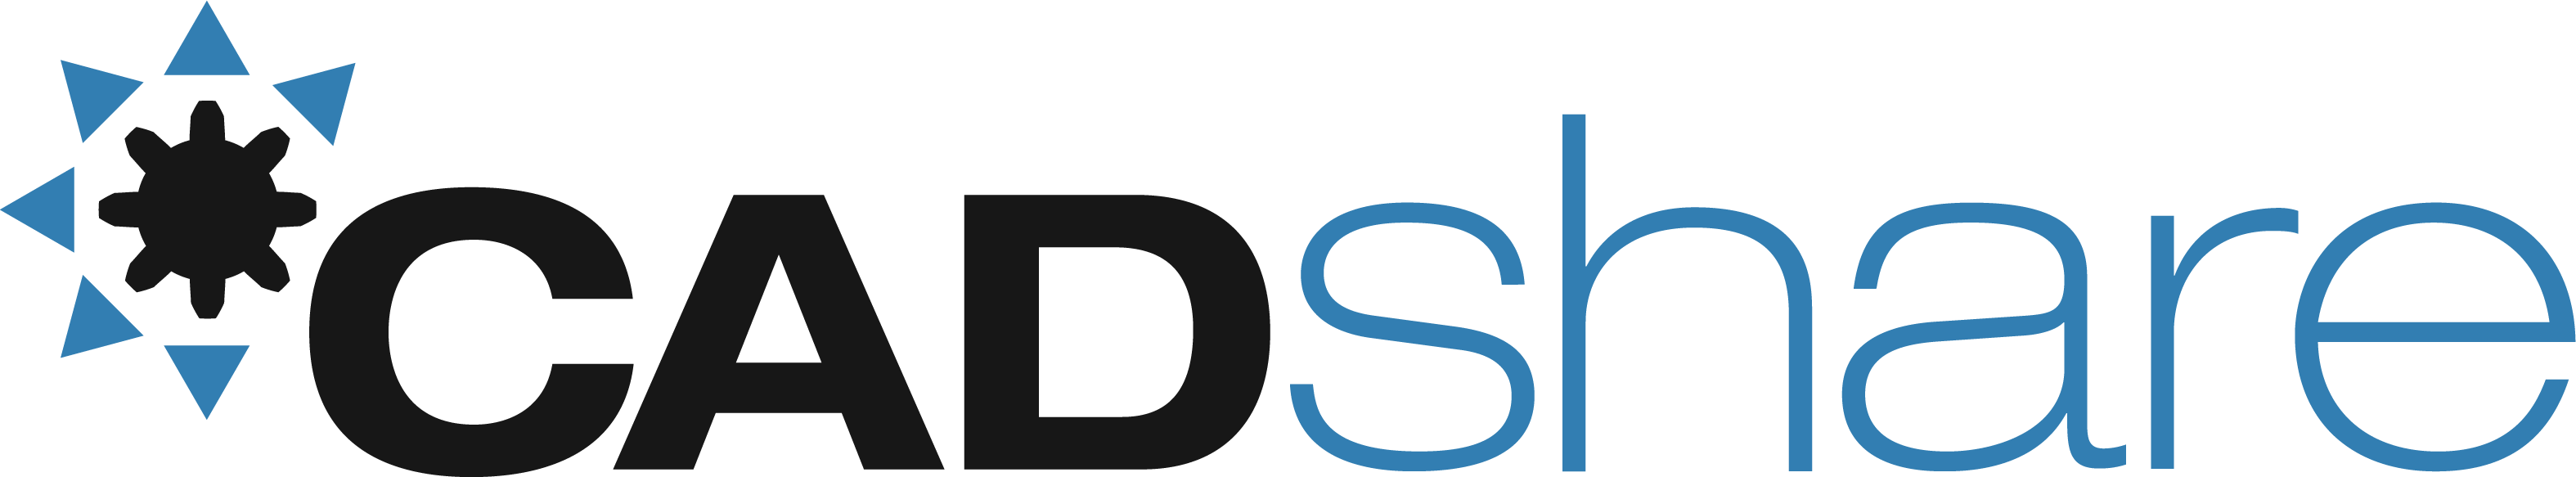 CADshare logo